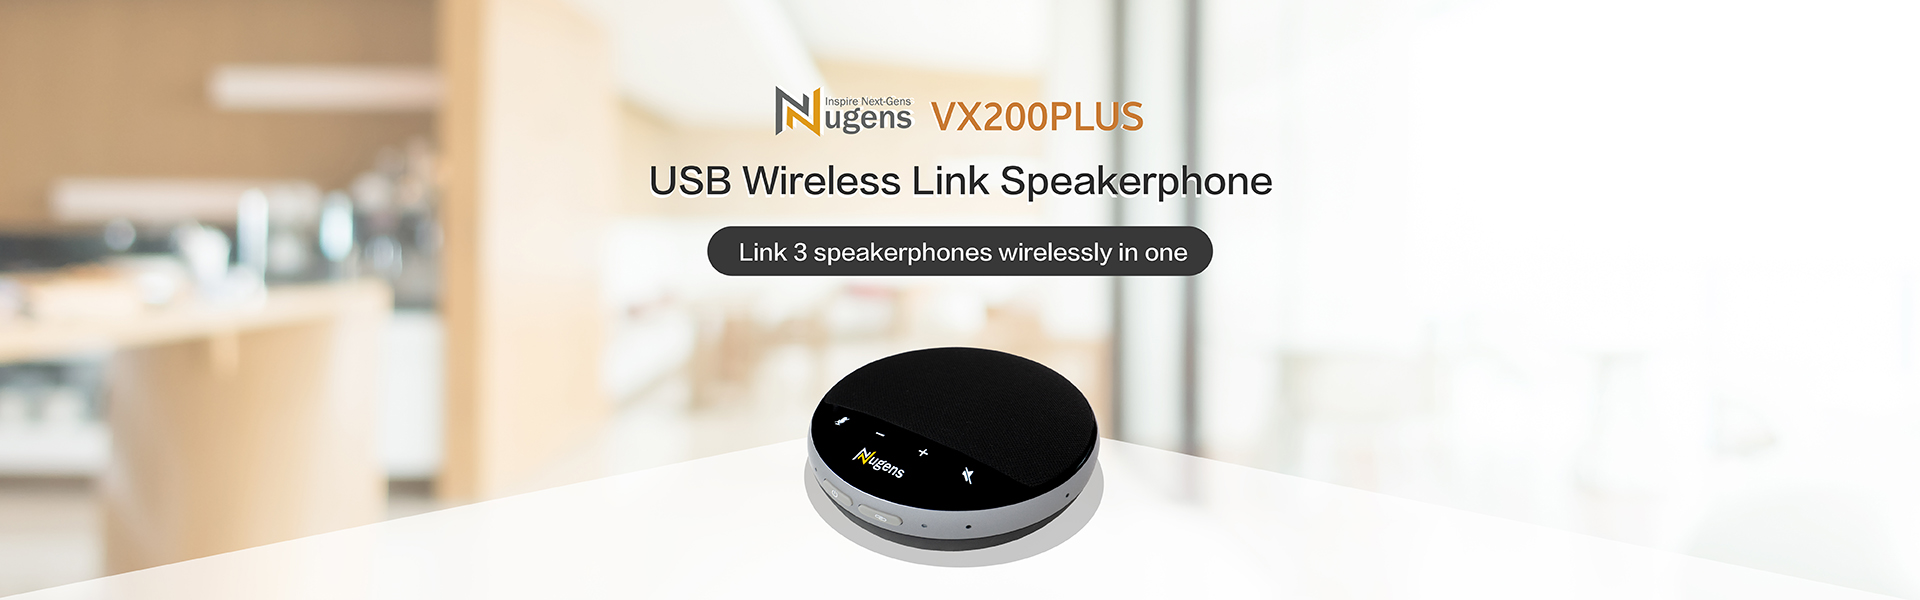 Nugens VX200PLUS USB Wireless Link SpeakerphoneBanner